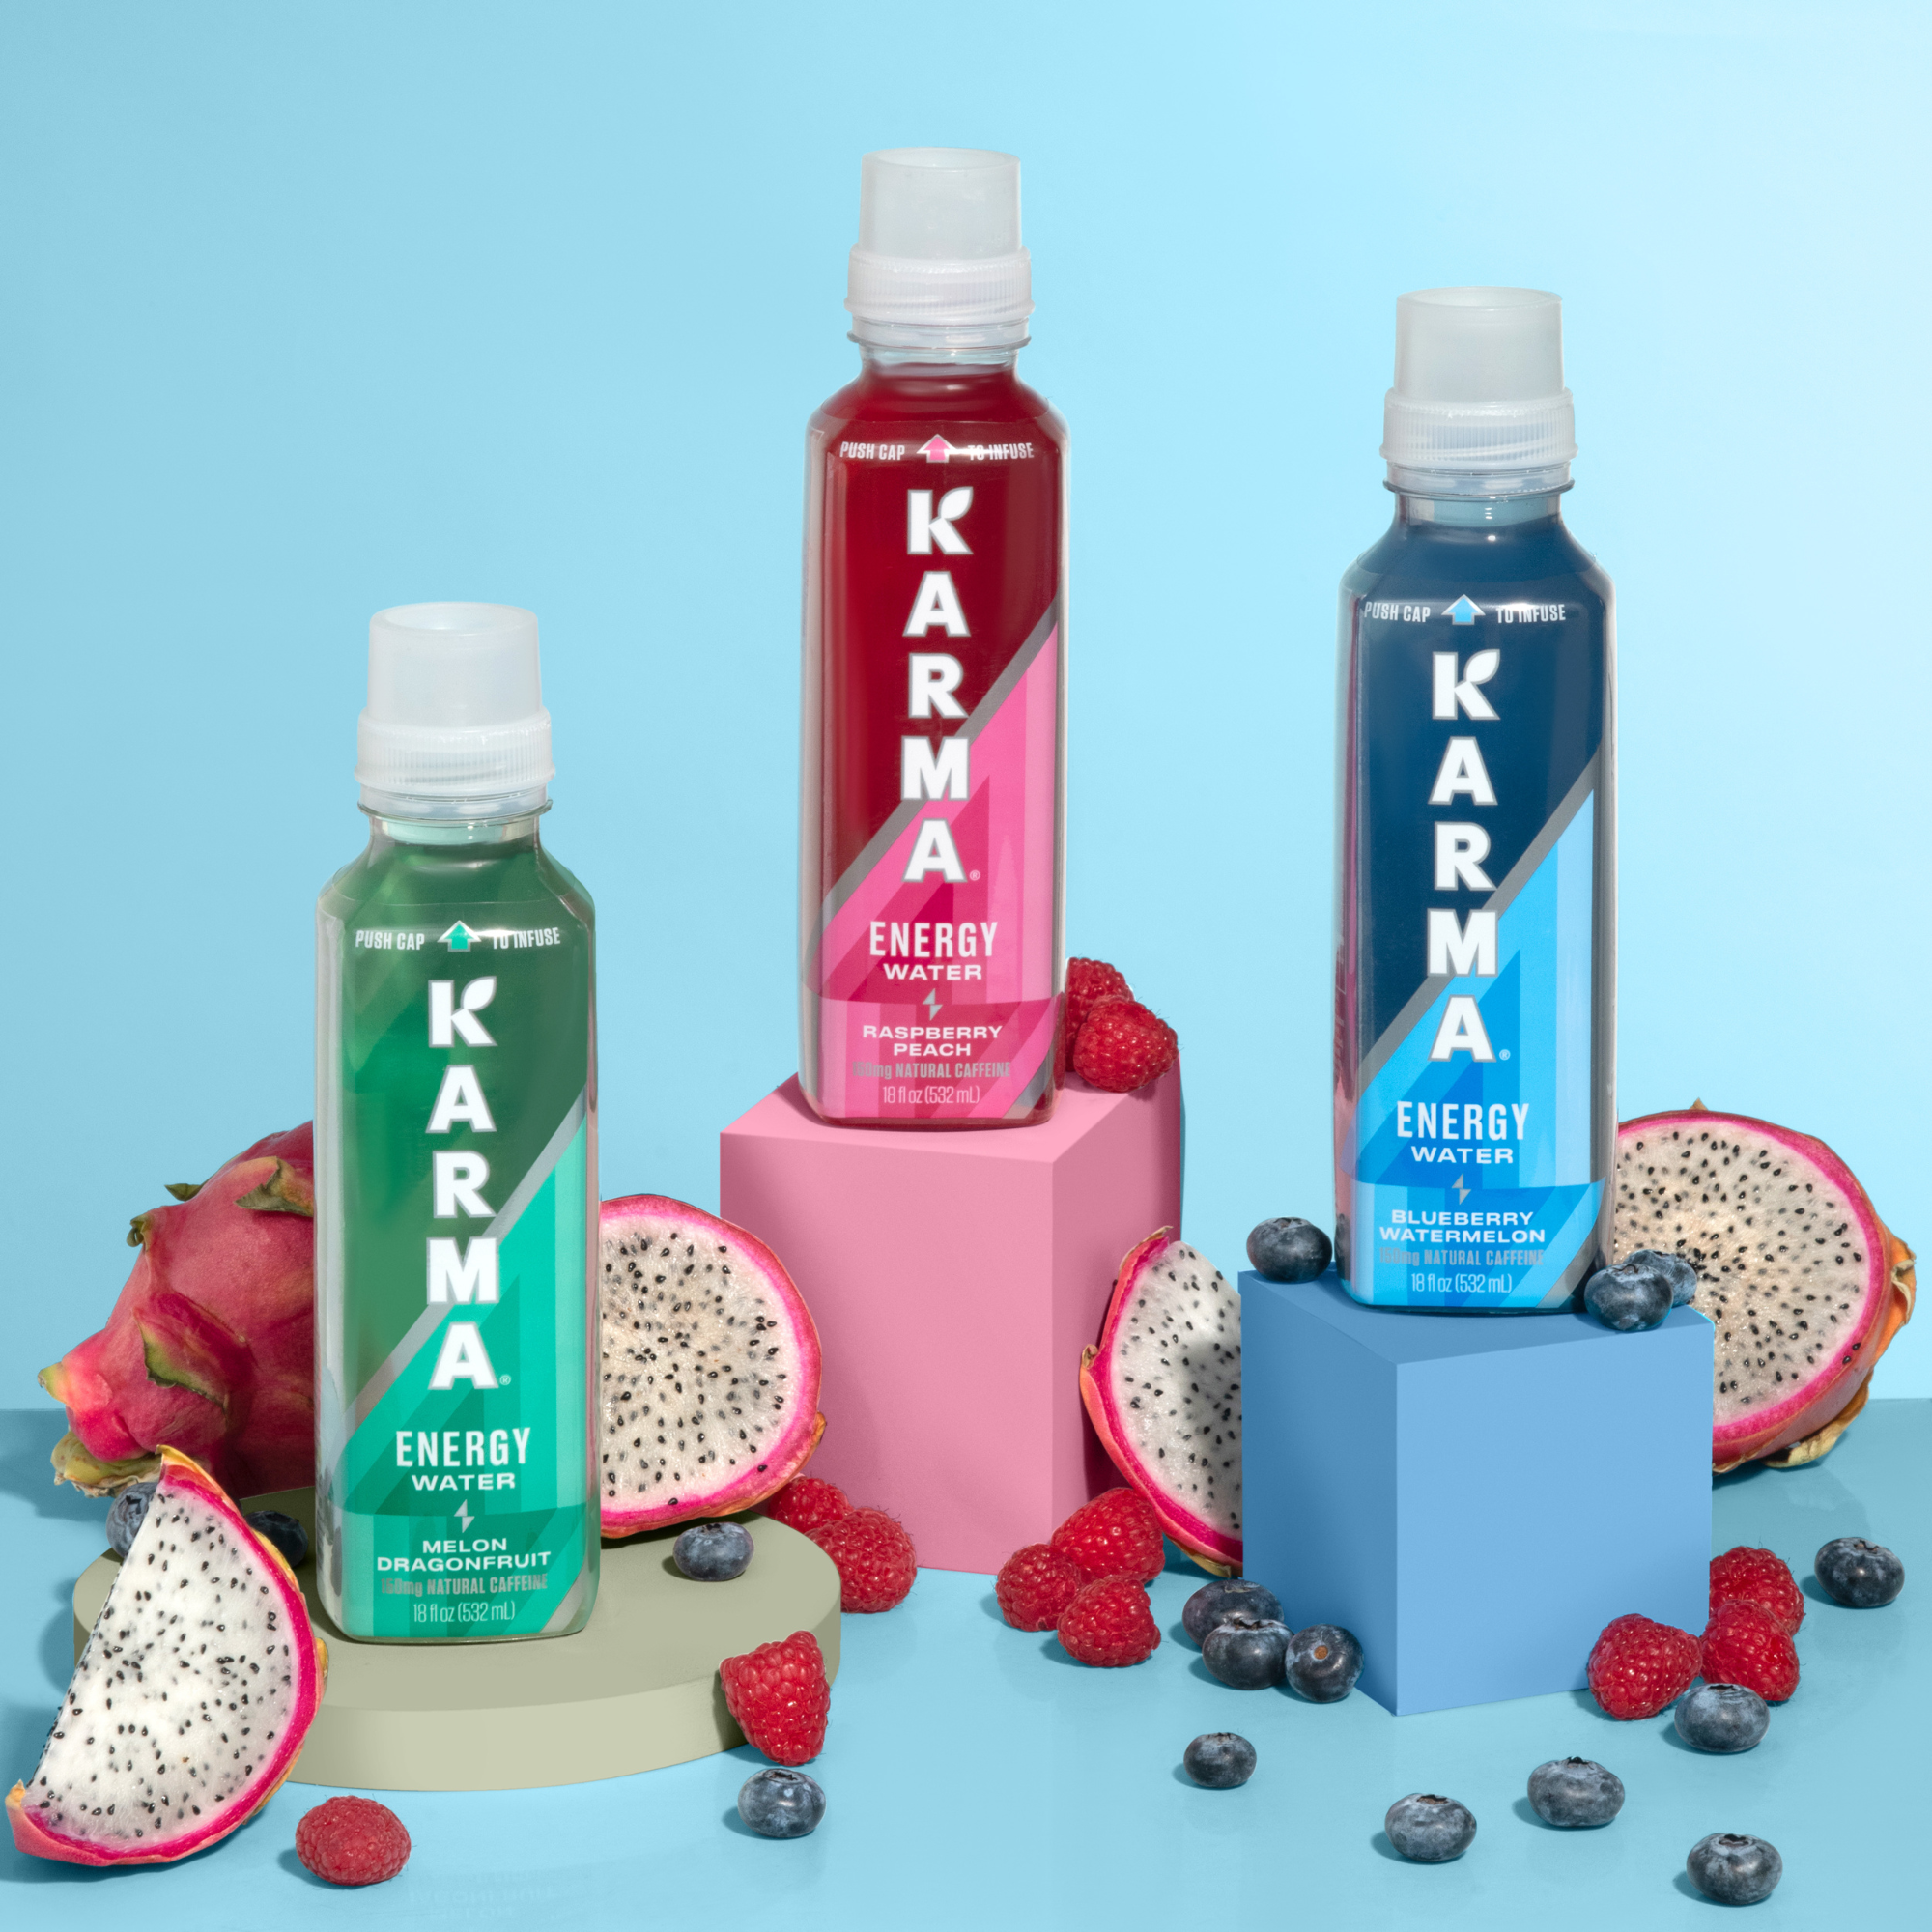 Studio shot of Karma Energy Water; Melon Dragonfruit, Raspberry Peach, and Blueberry Watermelon